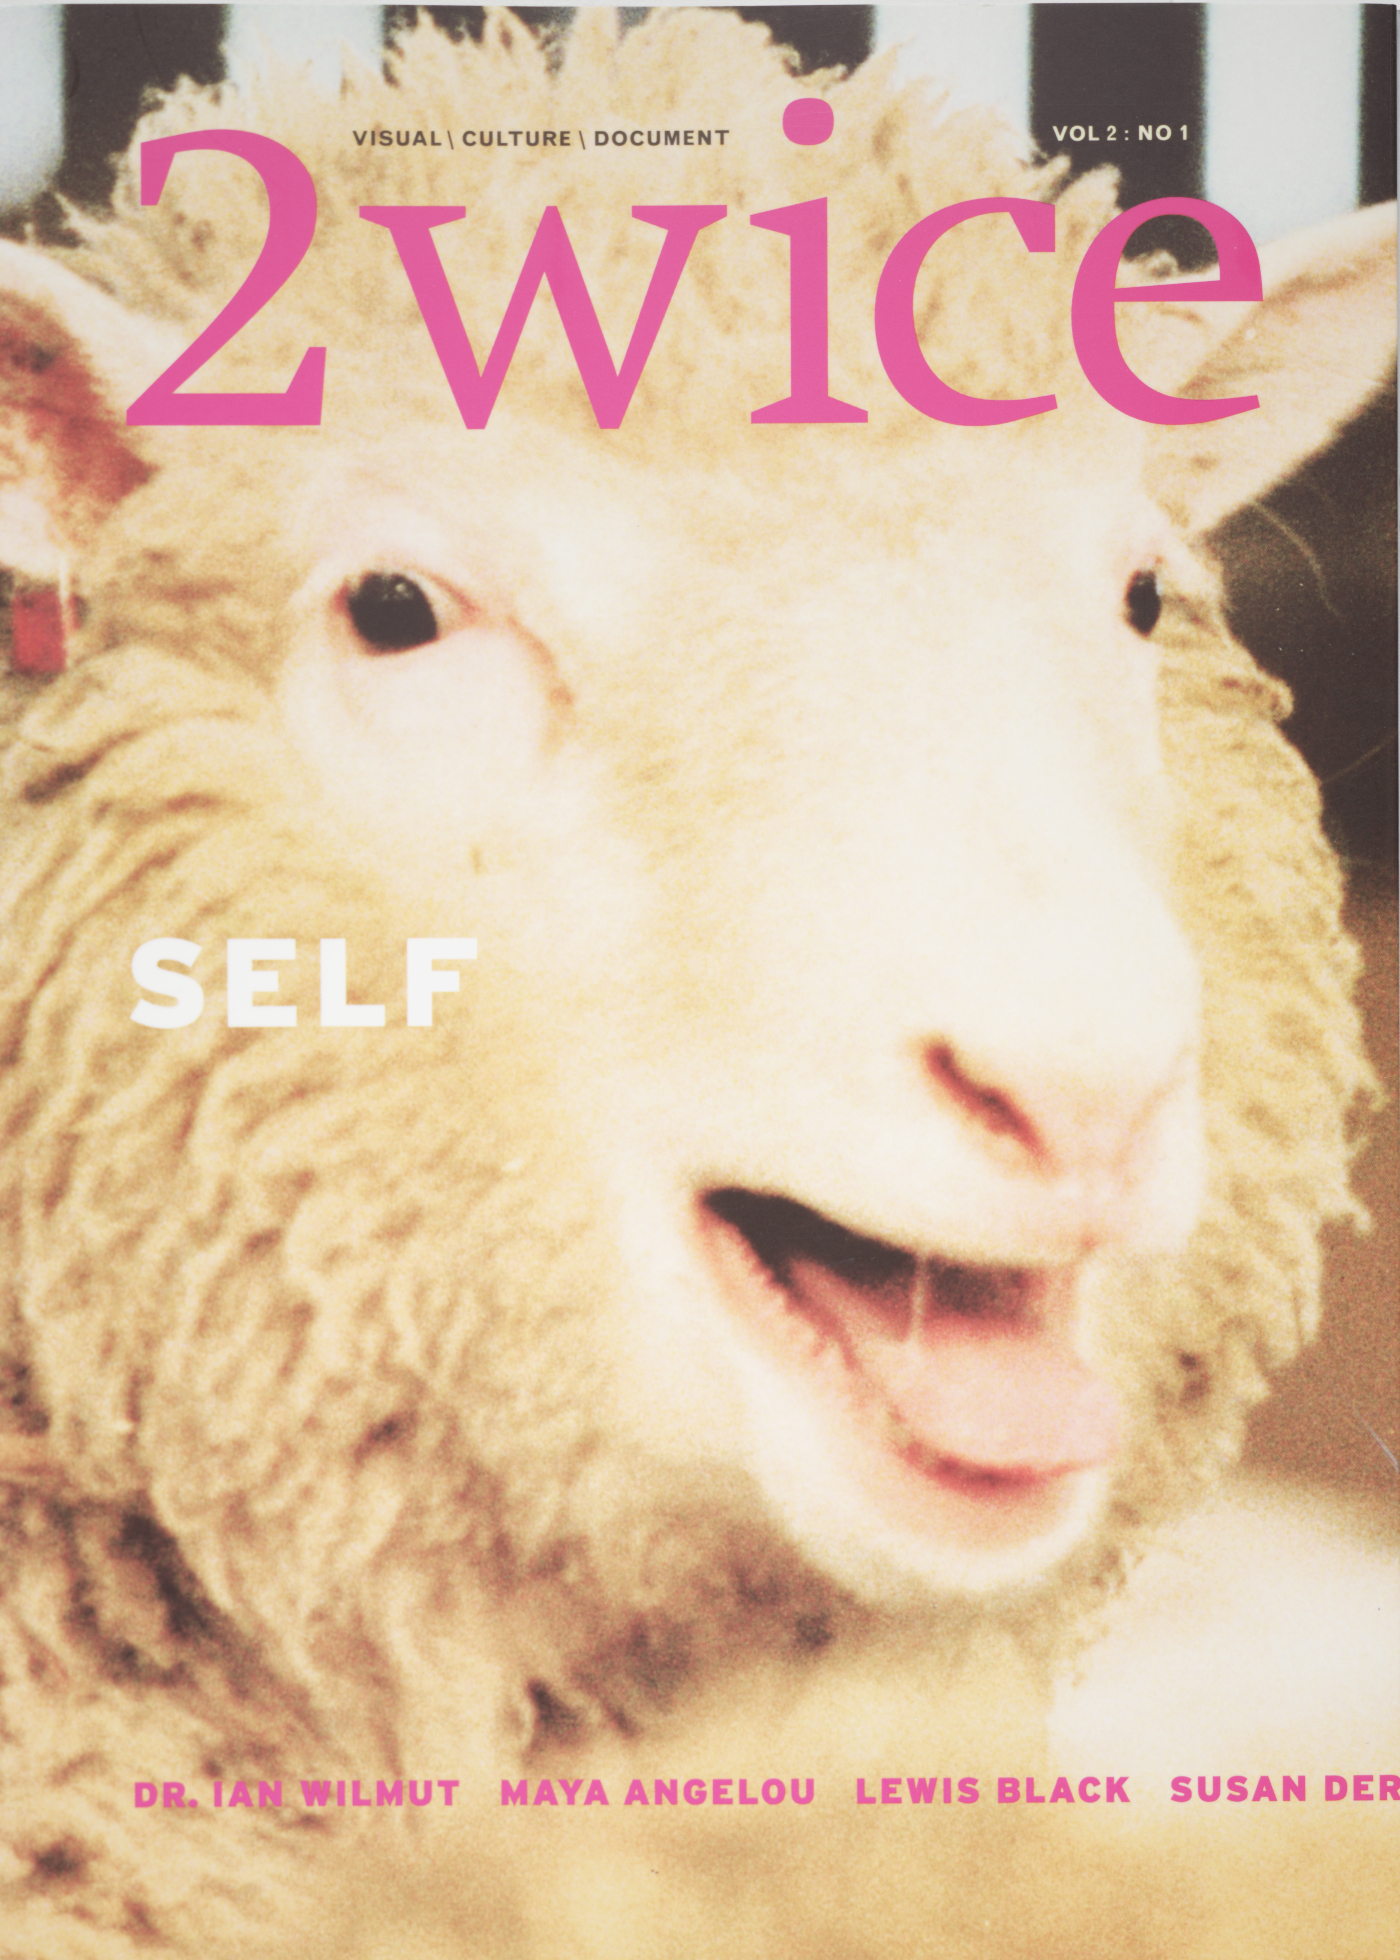 2wice Magazine, Vol. 2, No. 1 “Self”